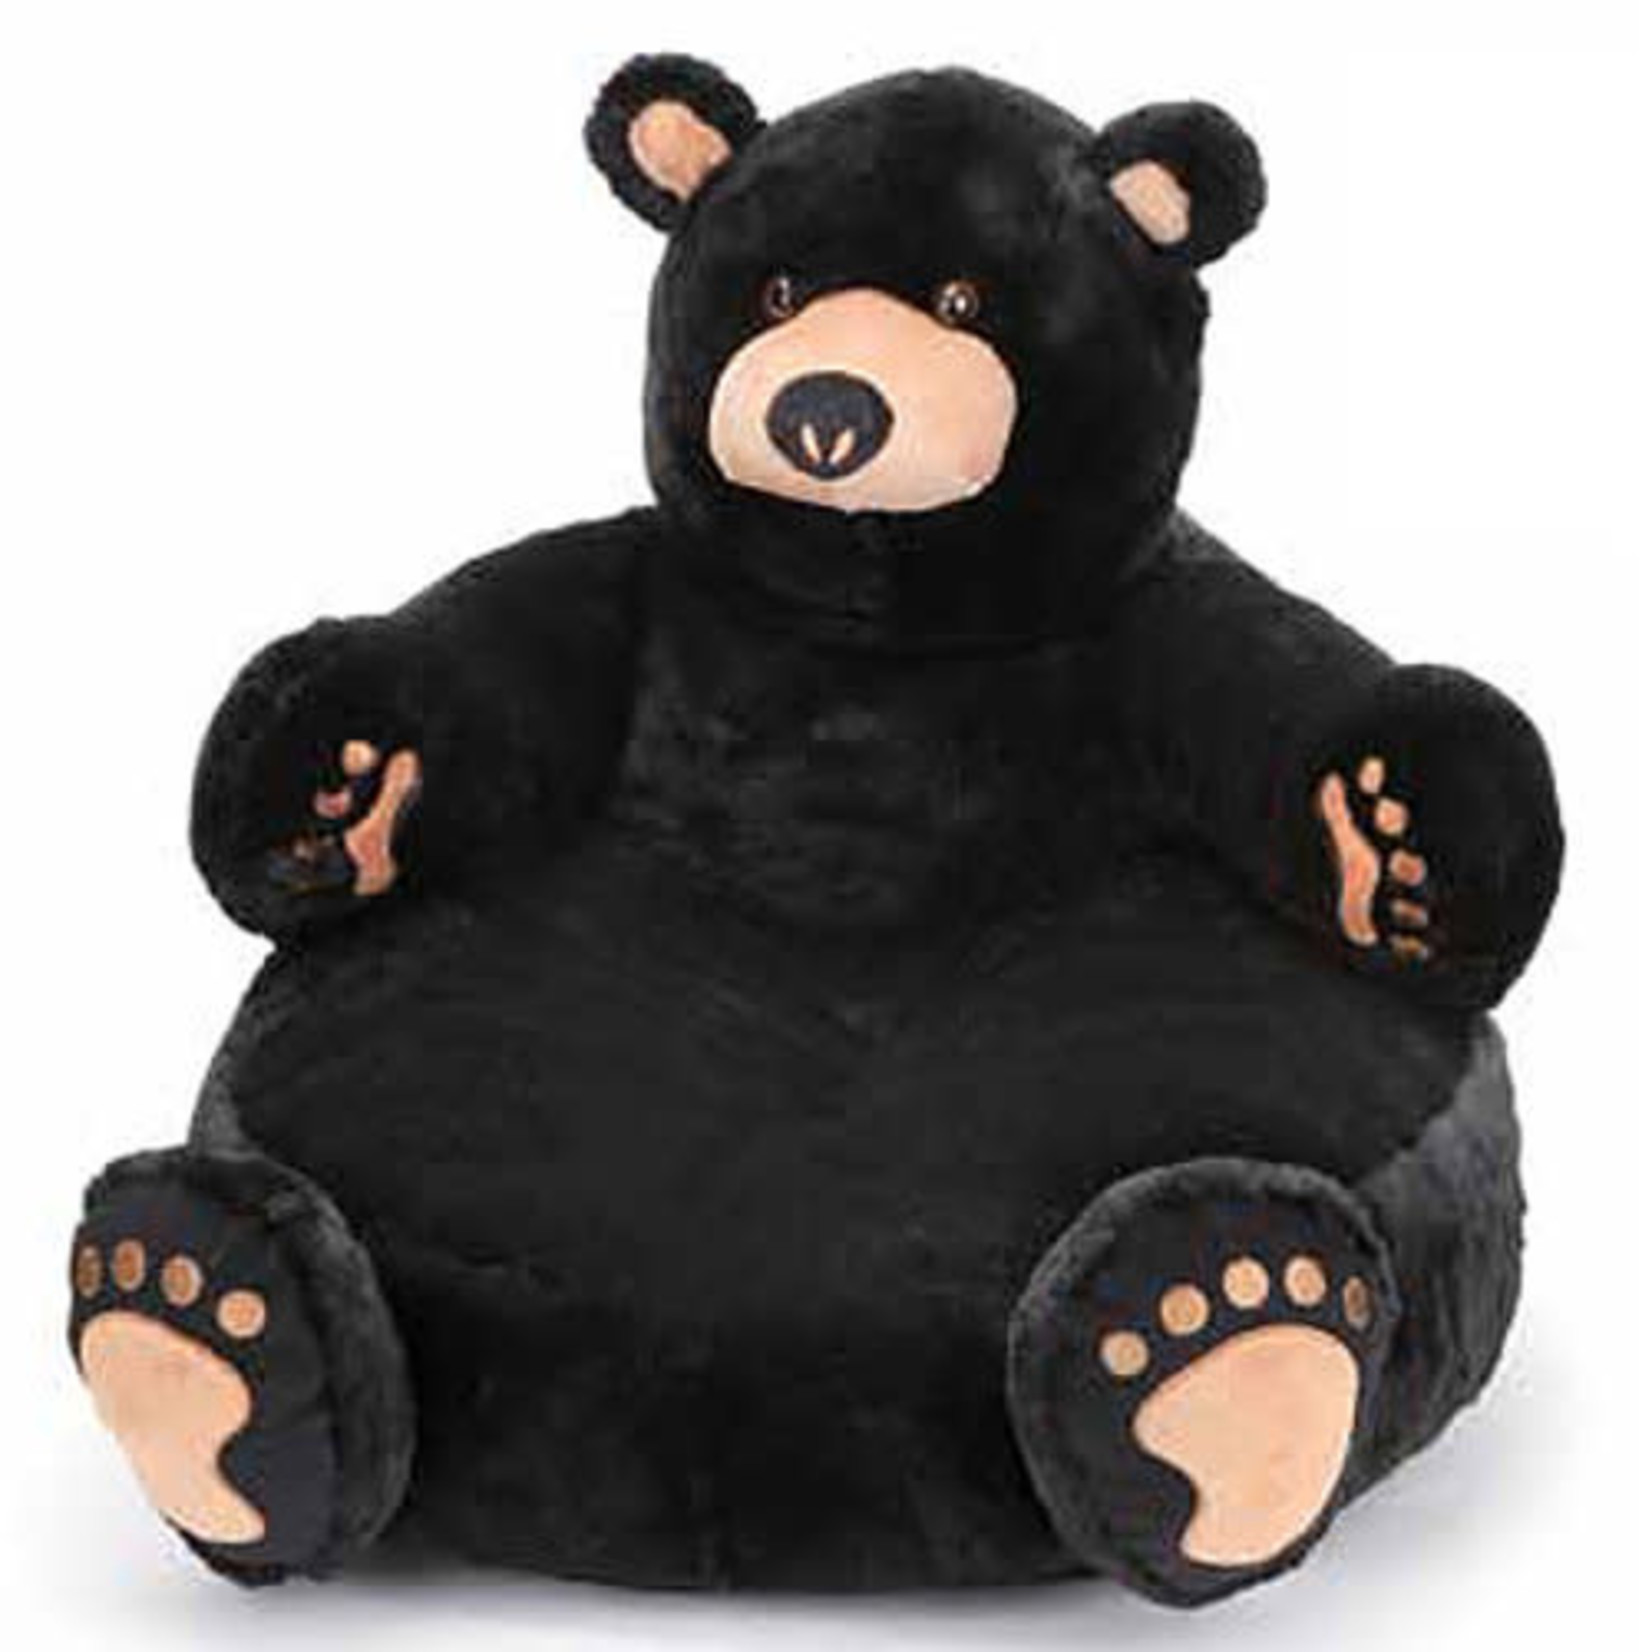 Huggles the bear plush chair